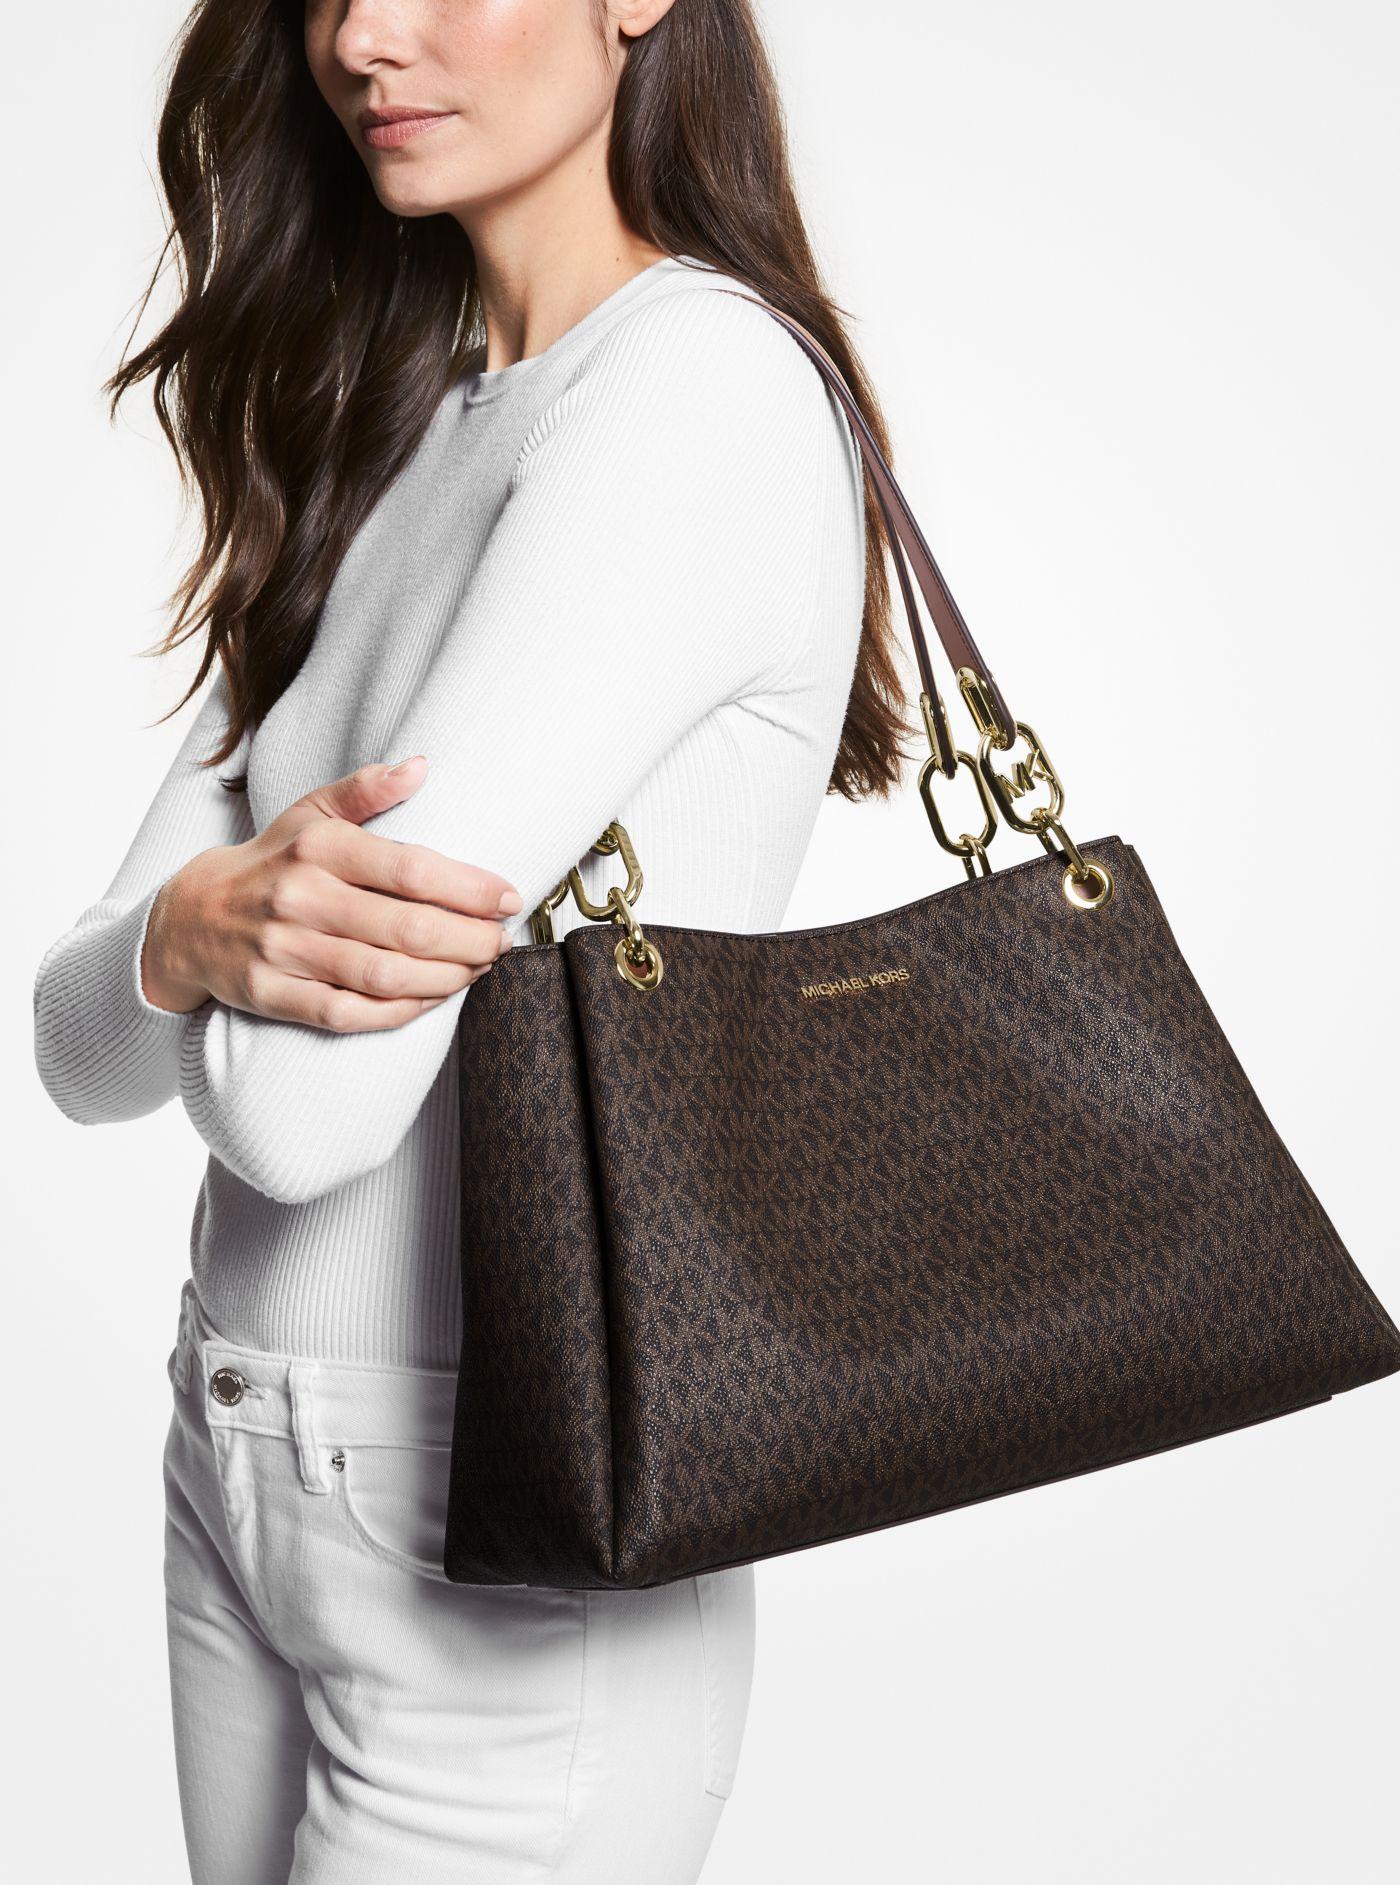 Michael Kors JOAN LARGE SLOUCHY LEATHER SHOULDER BAG LUGGAGE MULTI Handbags  Amazoncom